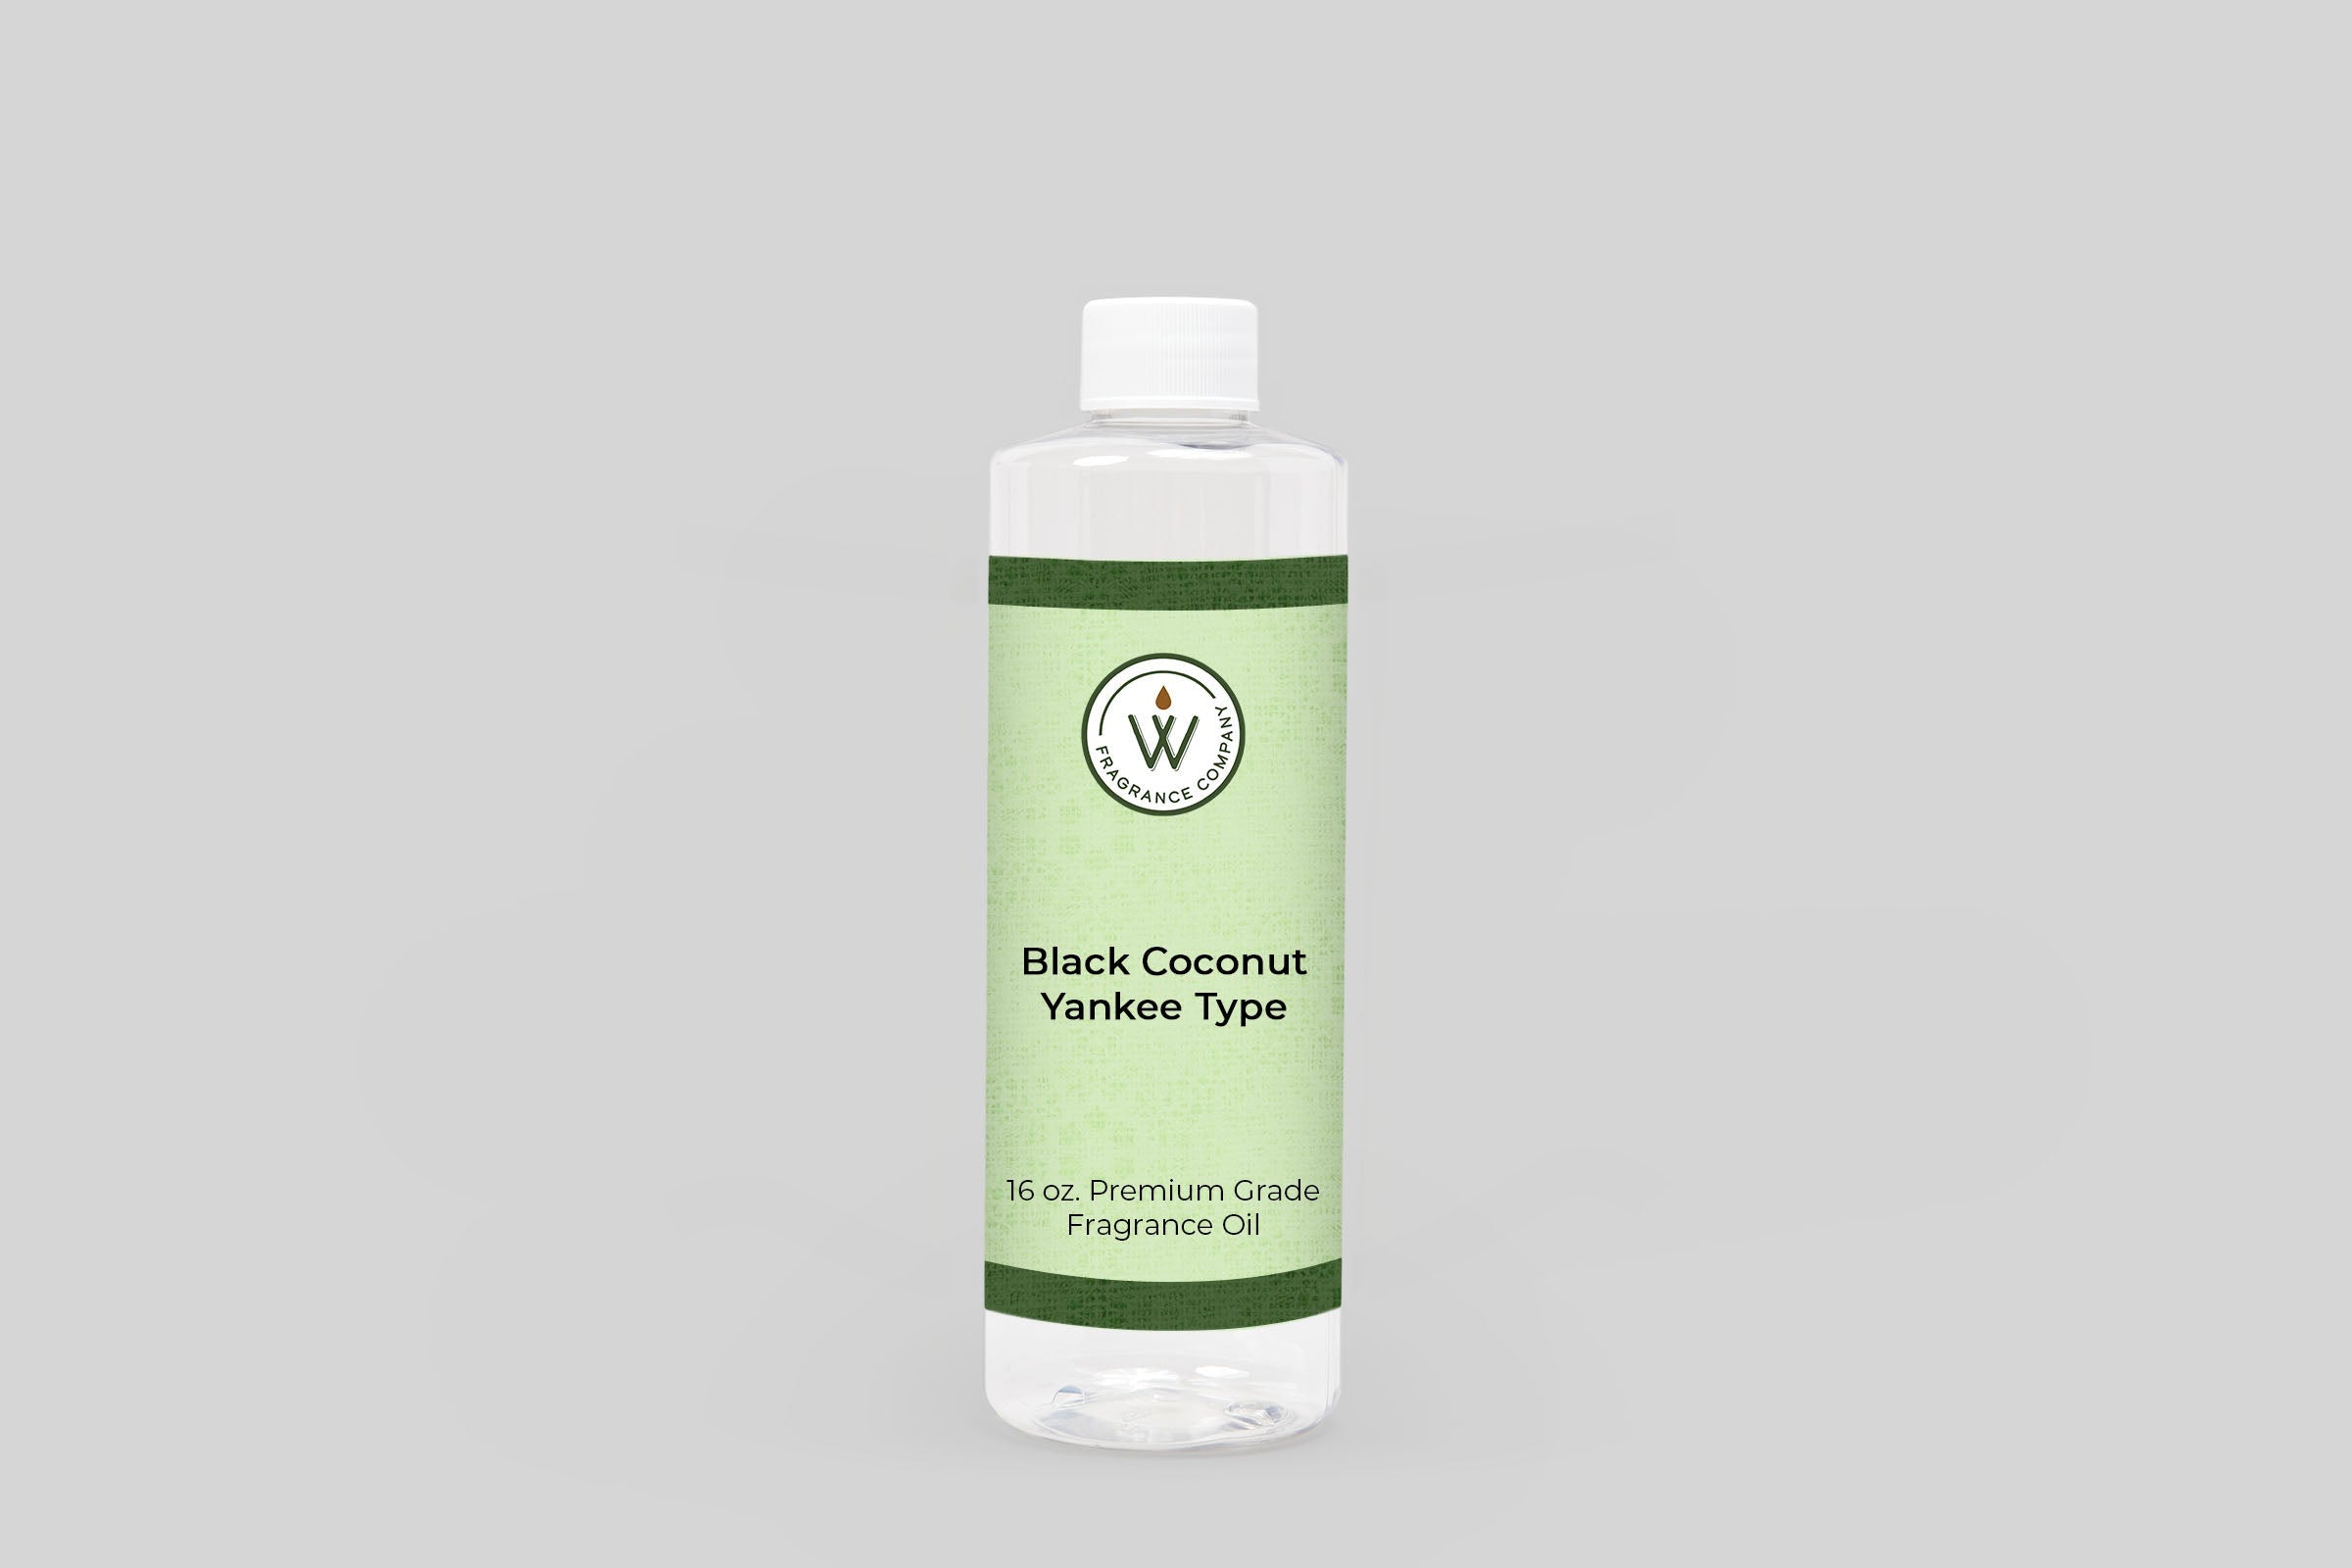 Black Coconut Yankee Type Fragrance Oil